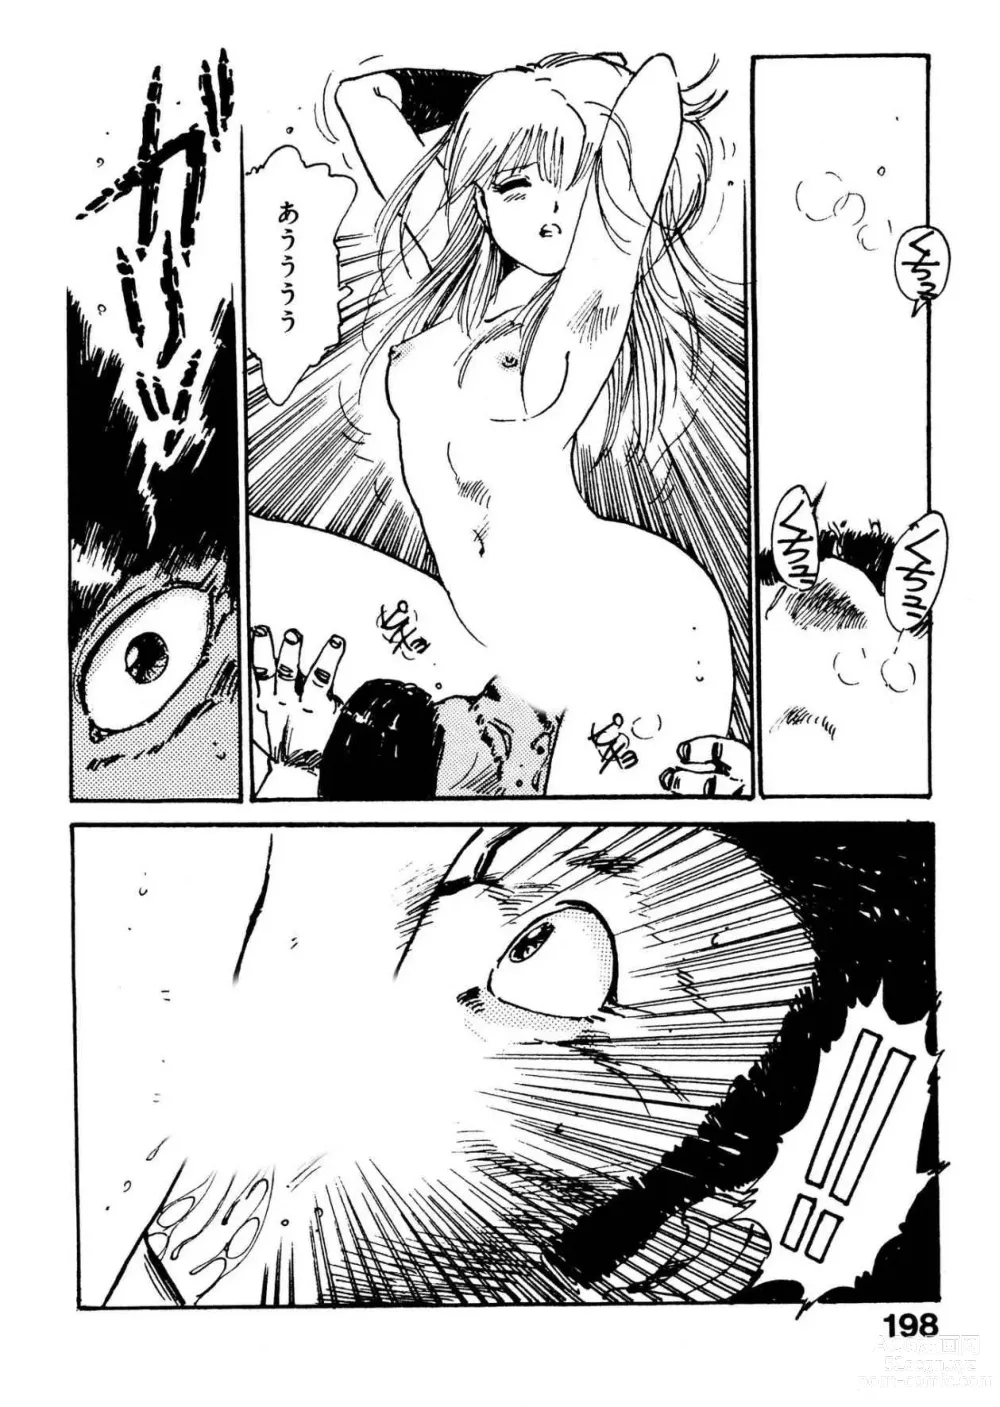 Page 198 of manga Bijo Hime Jigoku